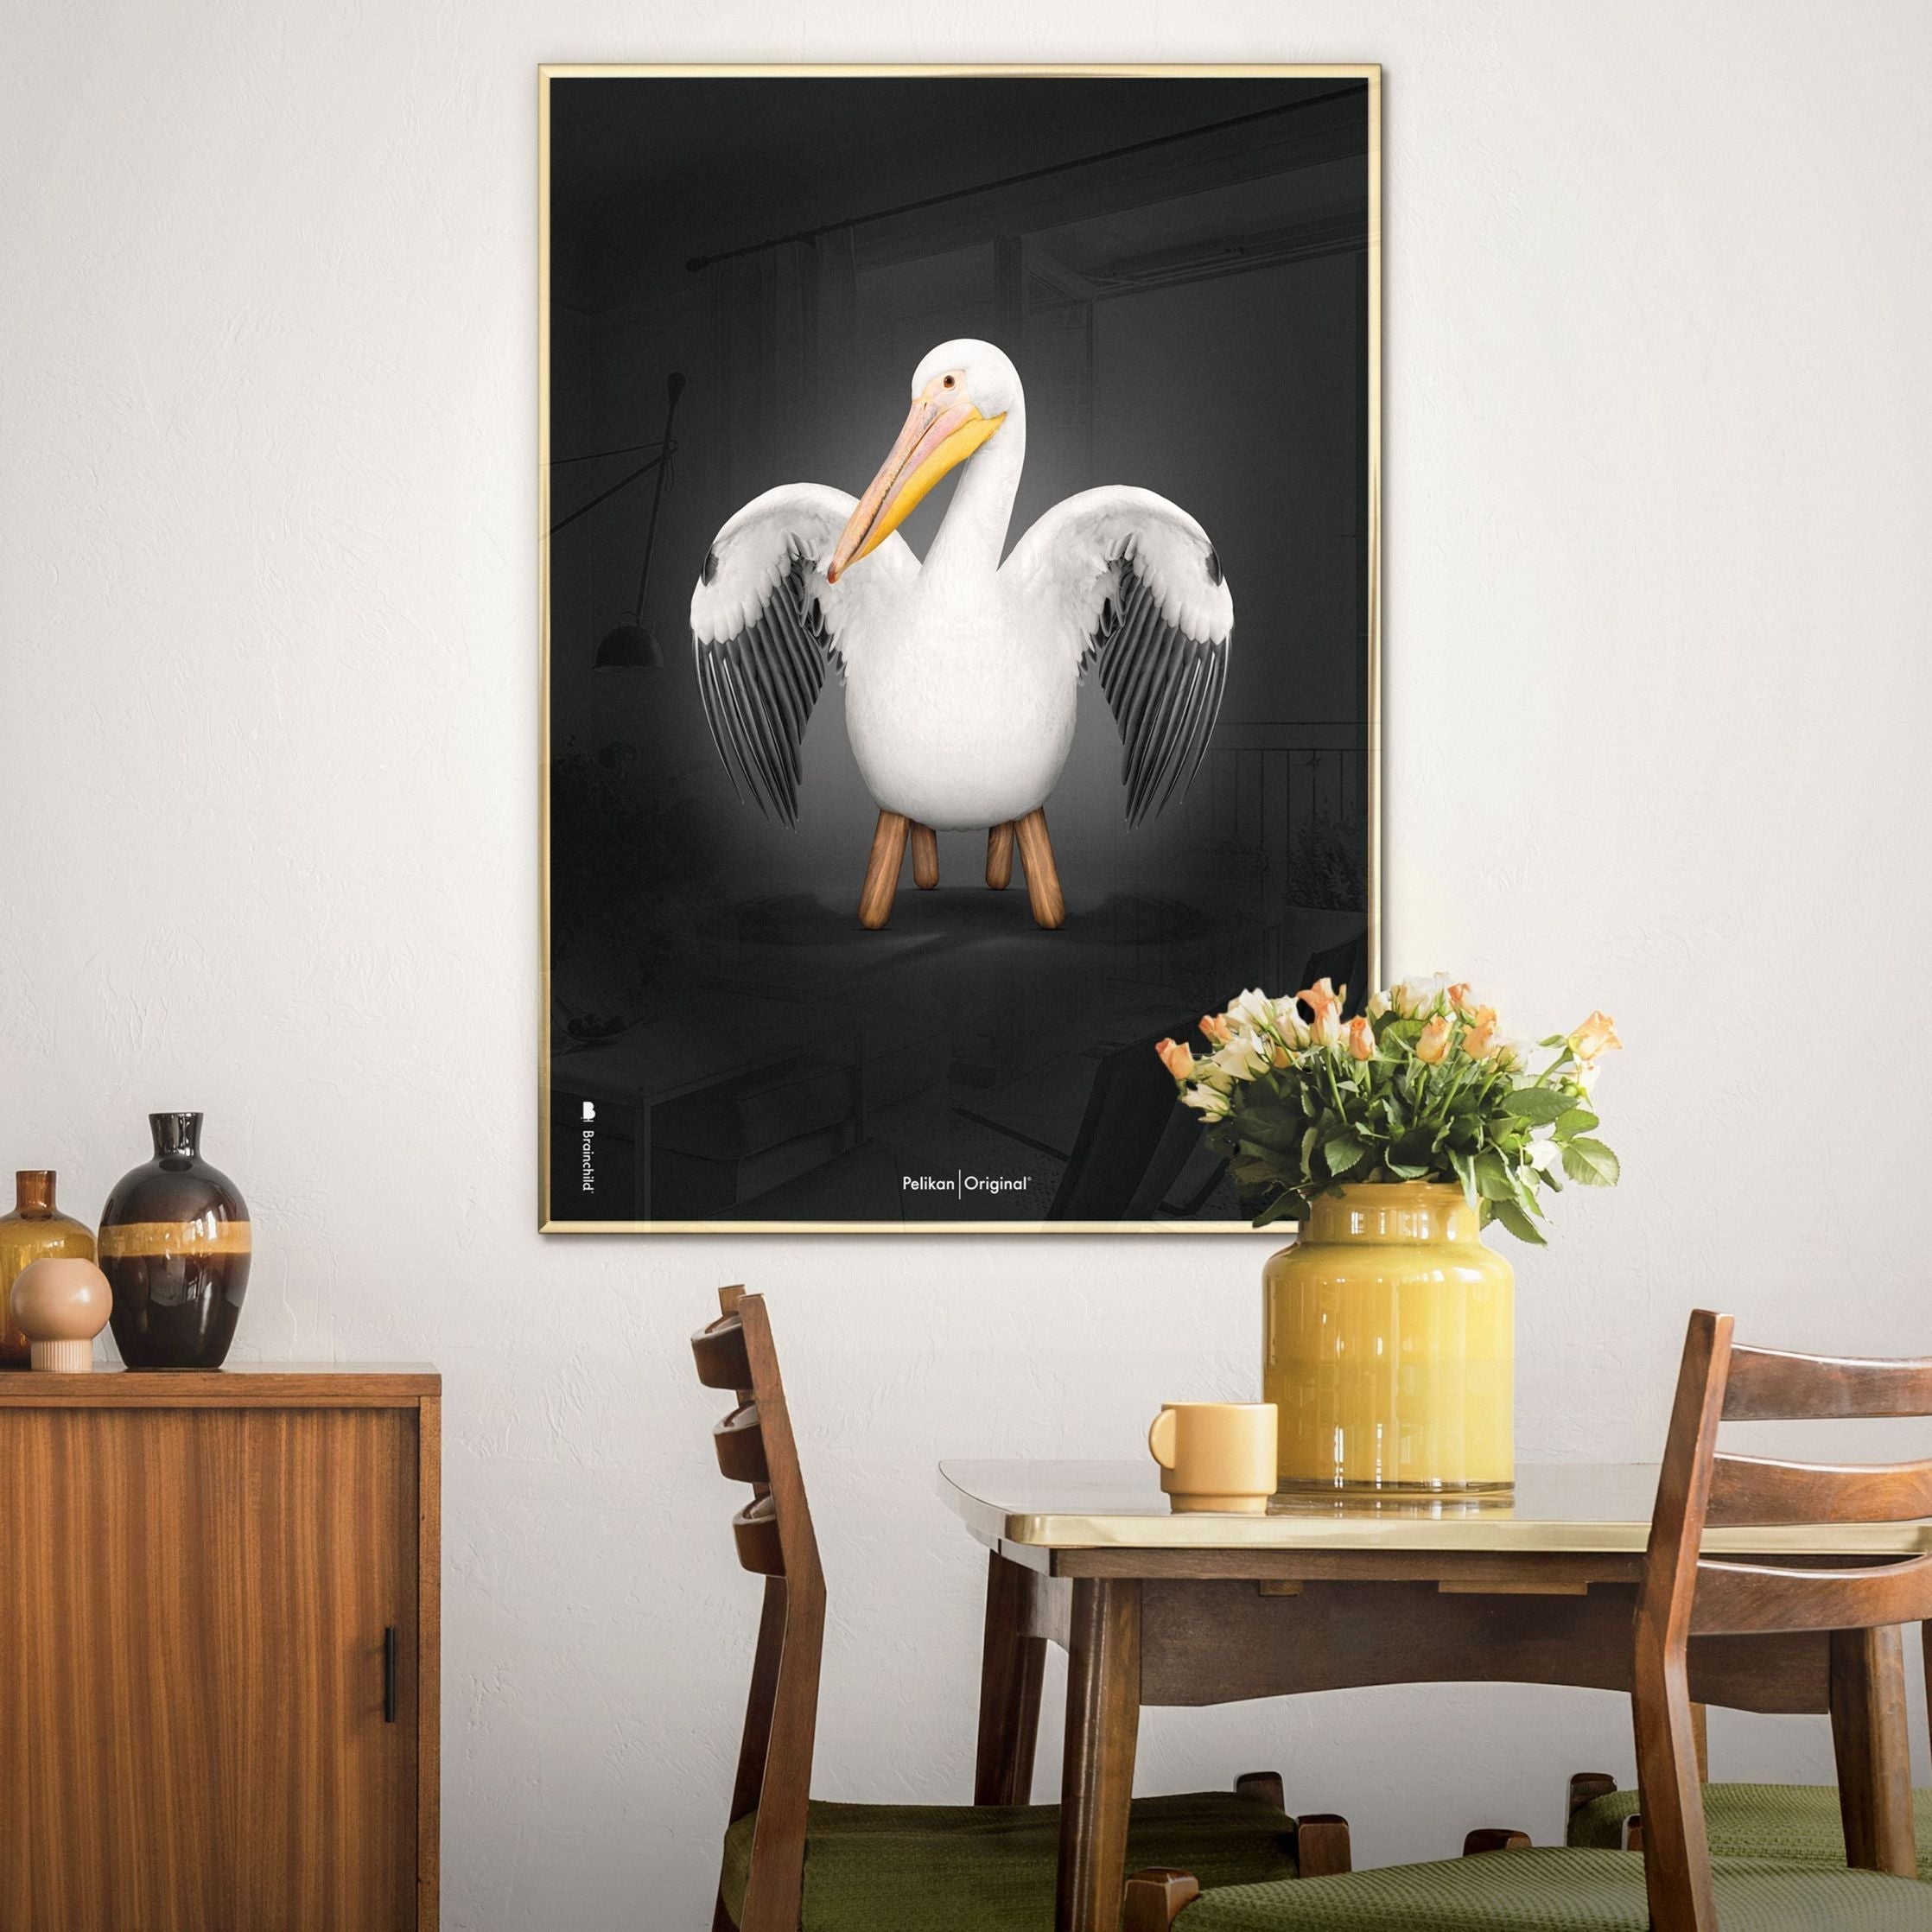 Brainchild Pelikan Classic Poster, Frame Made Of Light Wood 50x70 Cm, Black Background